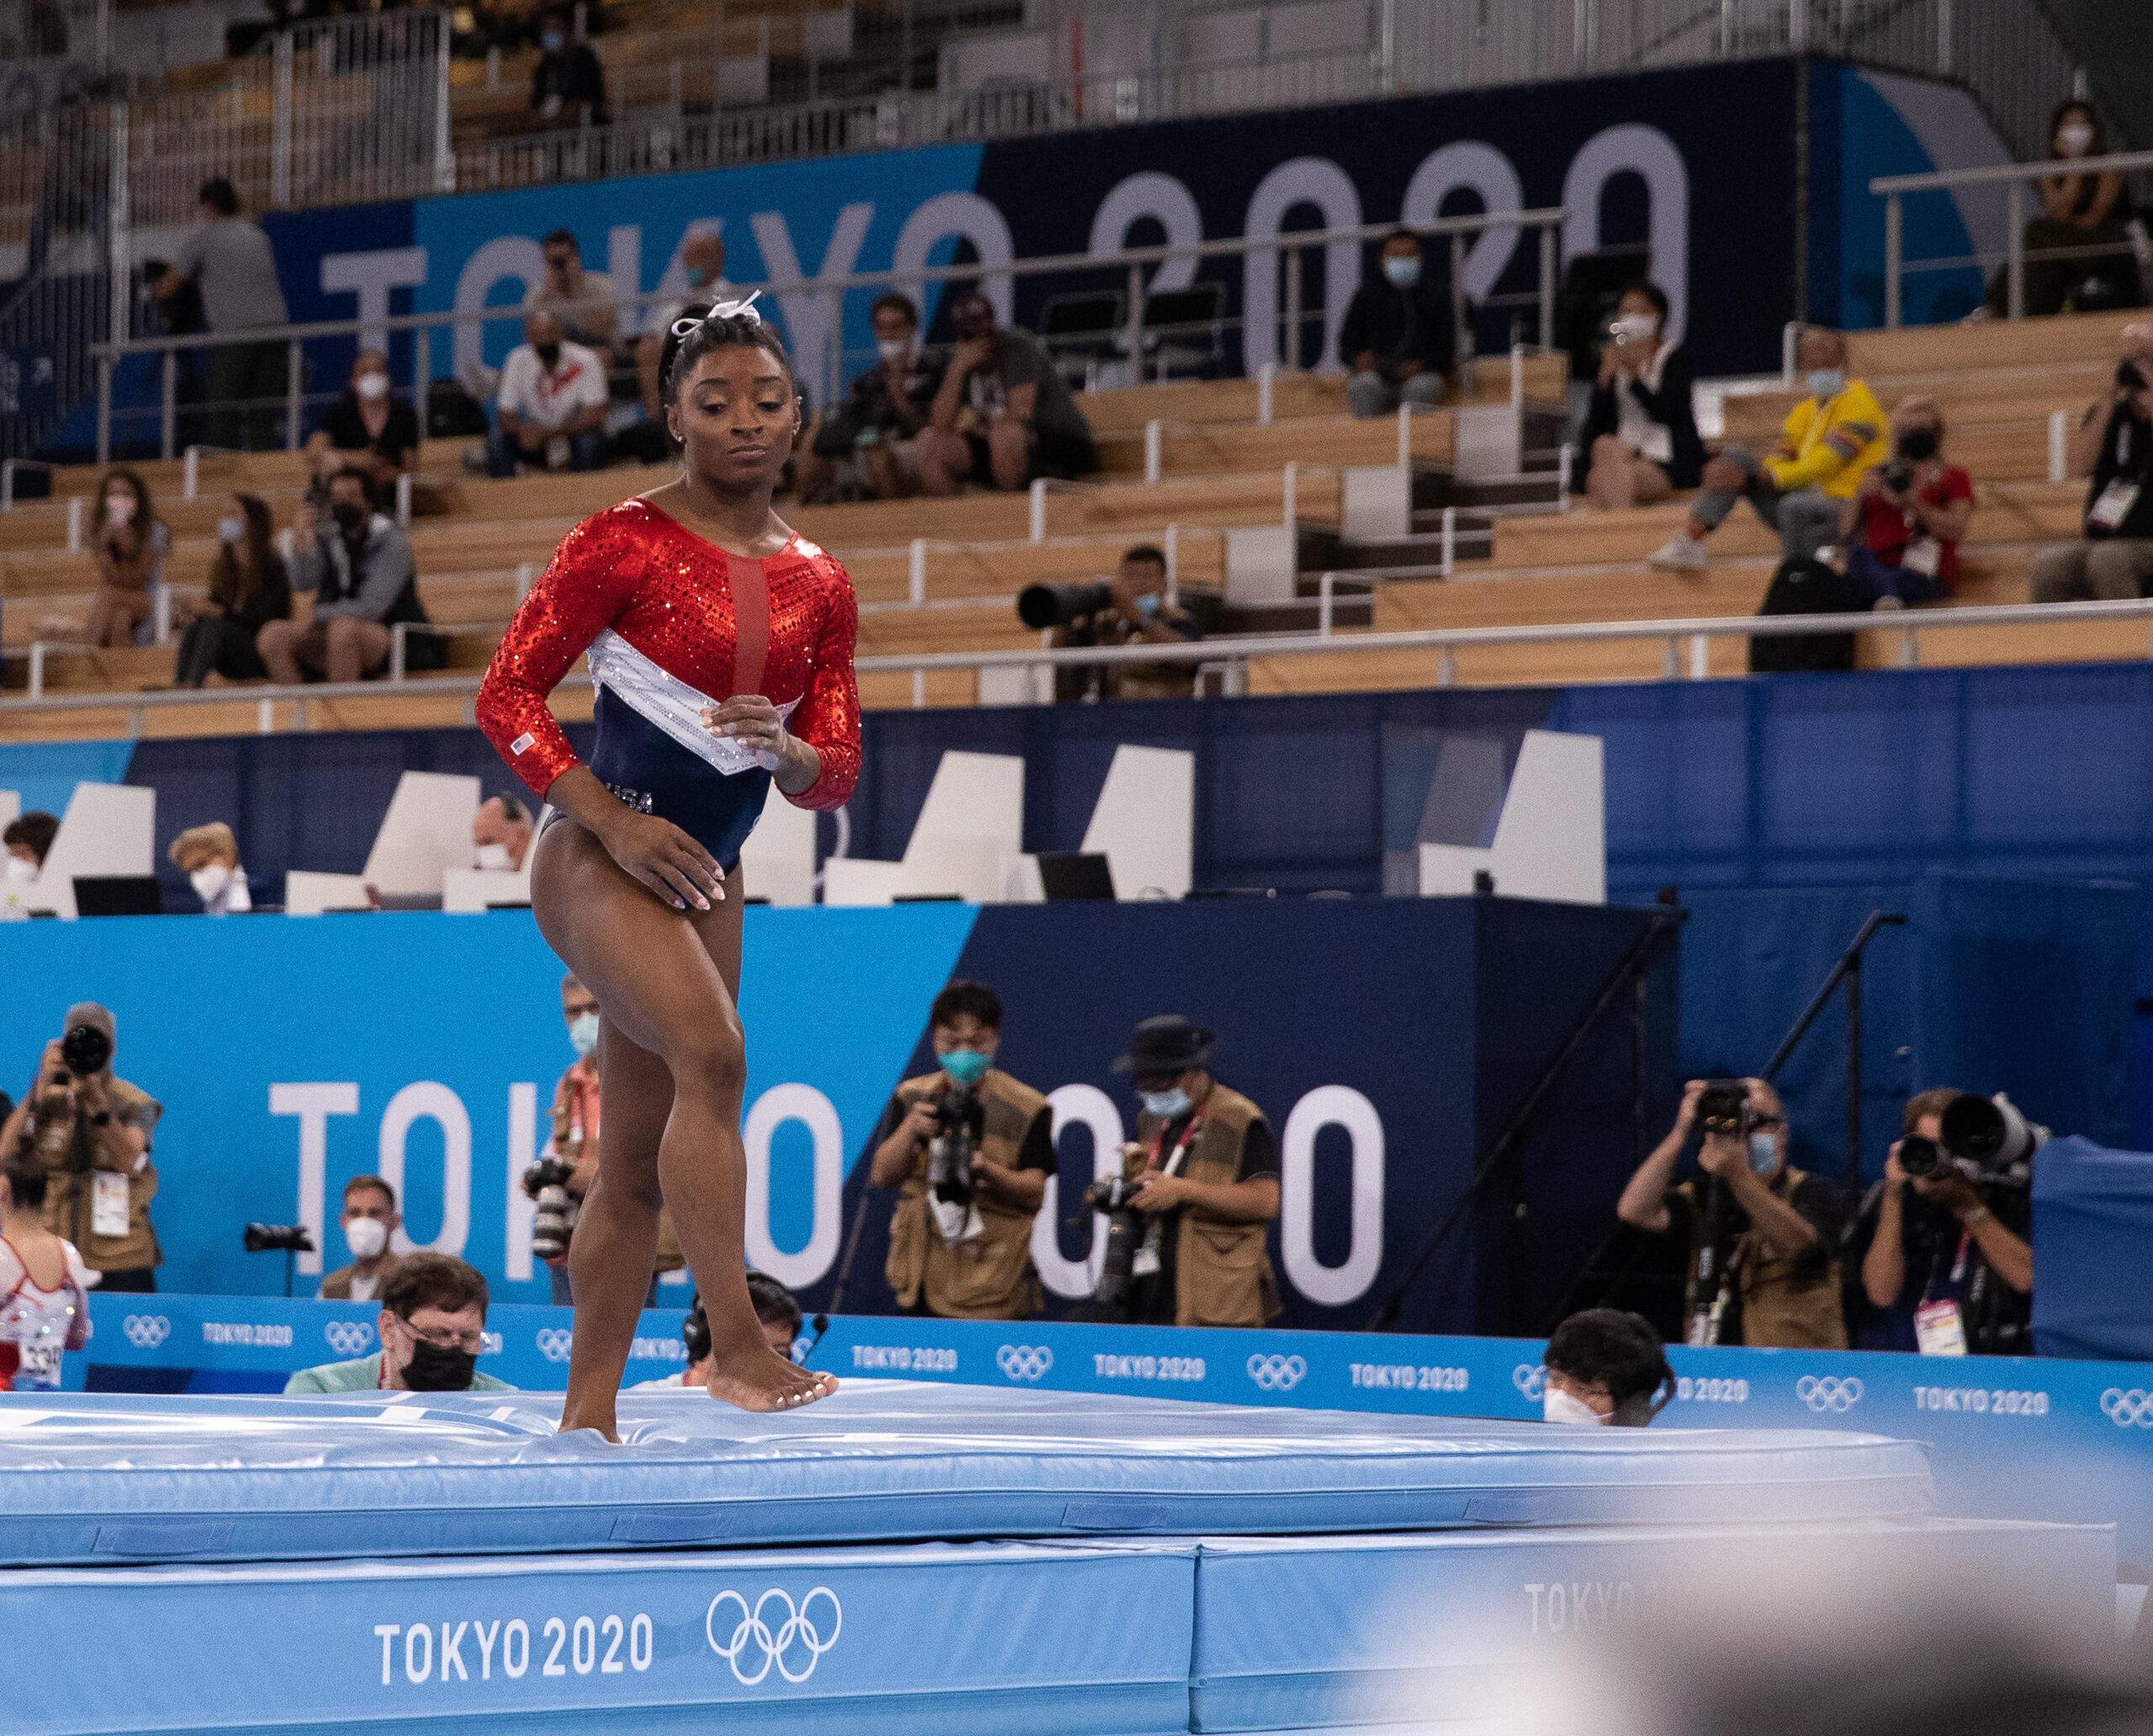 Simone Biles at the Tokyo Olympics 2020